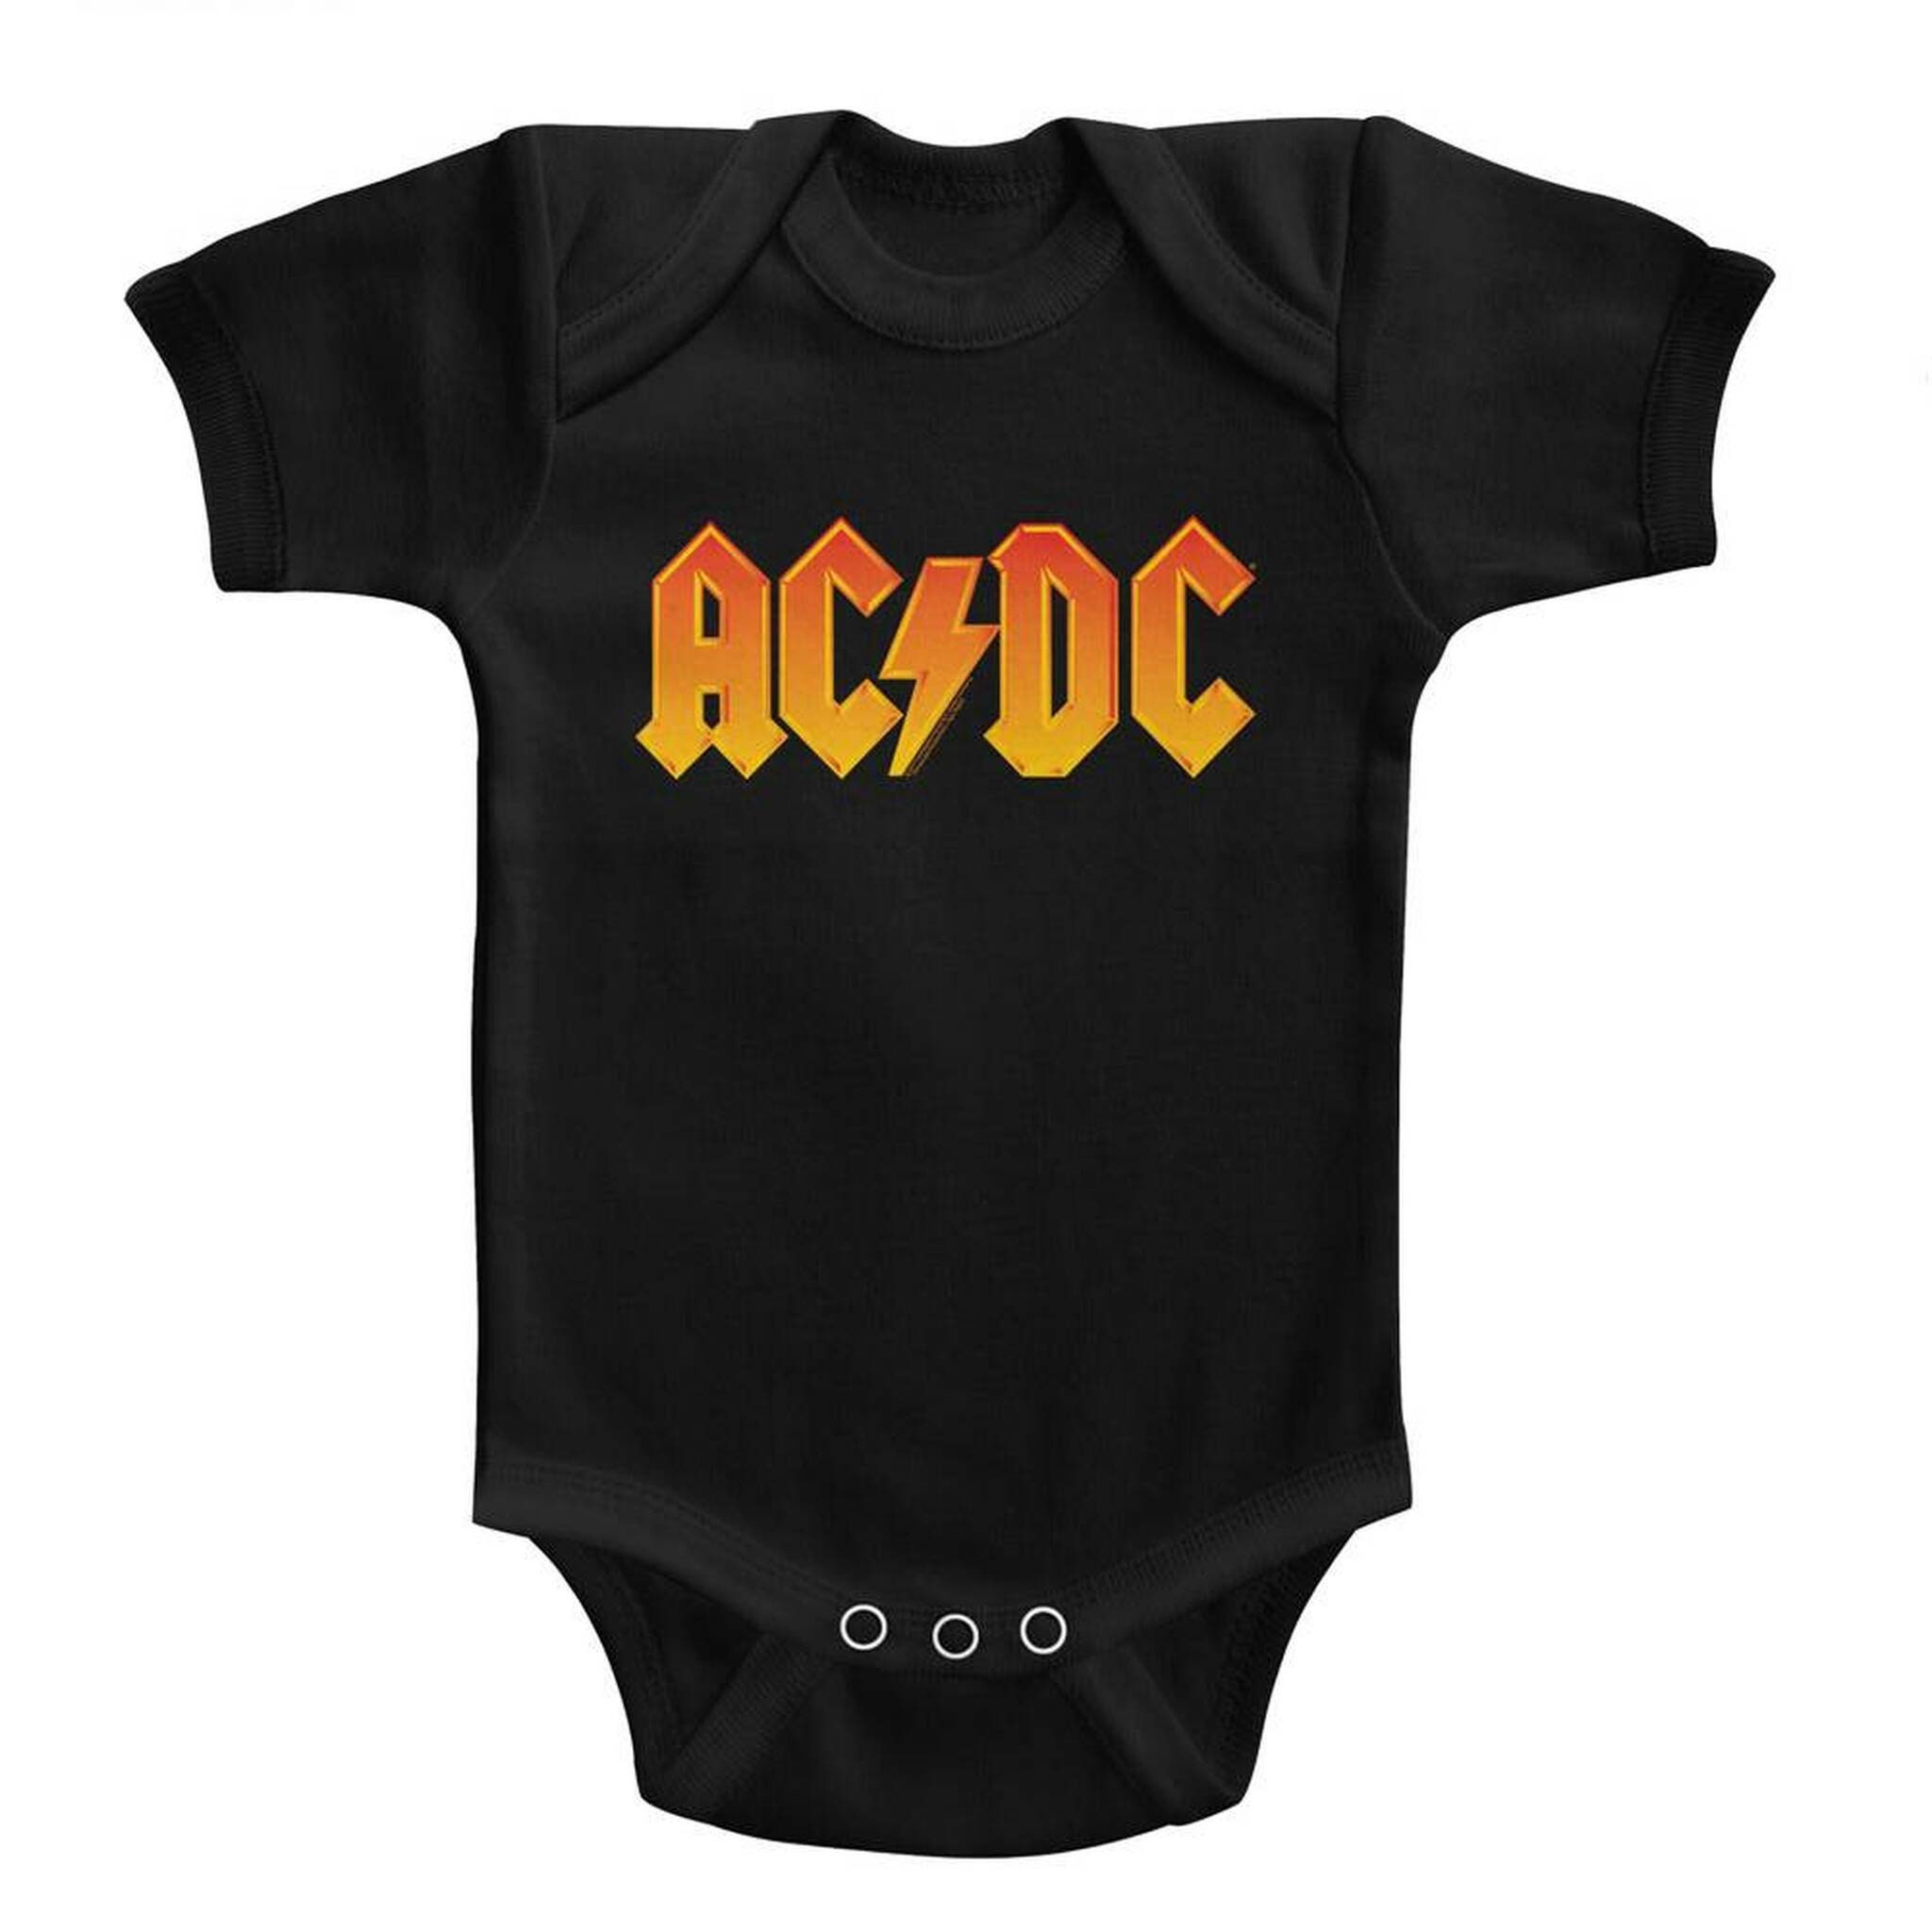 AC/DC Solid Orange Black Infant Baby Onesie T-Shirt